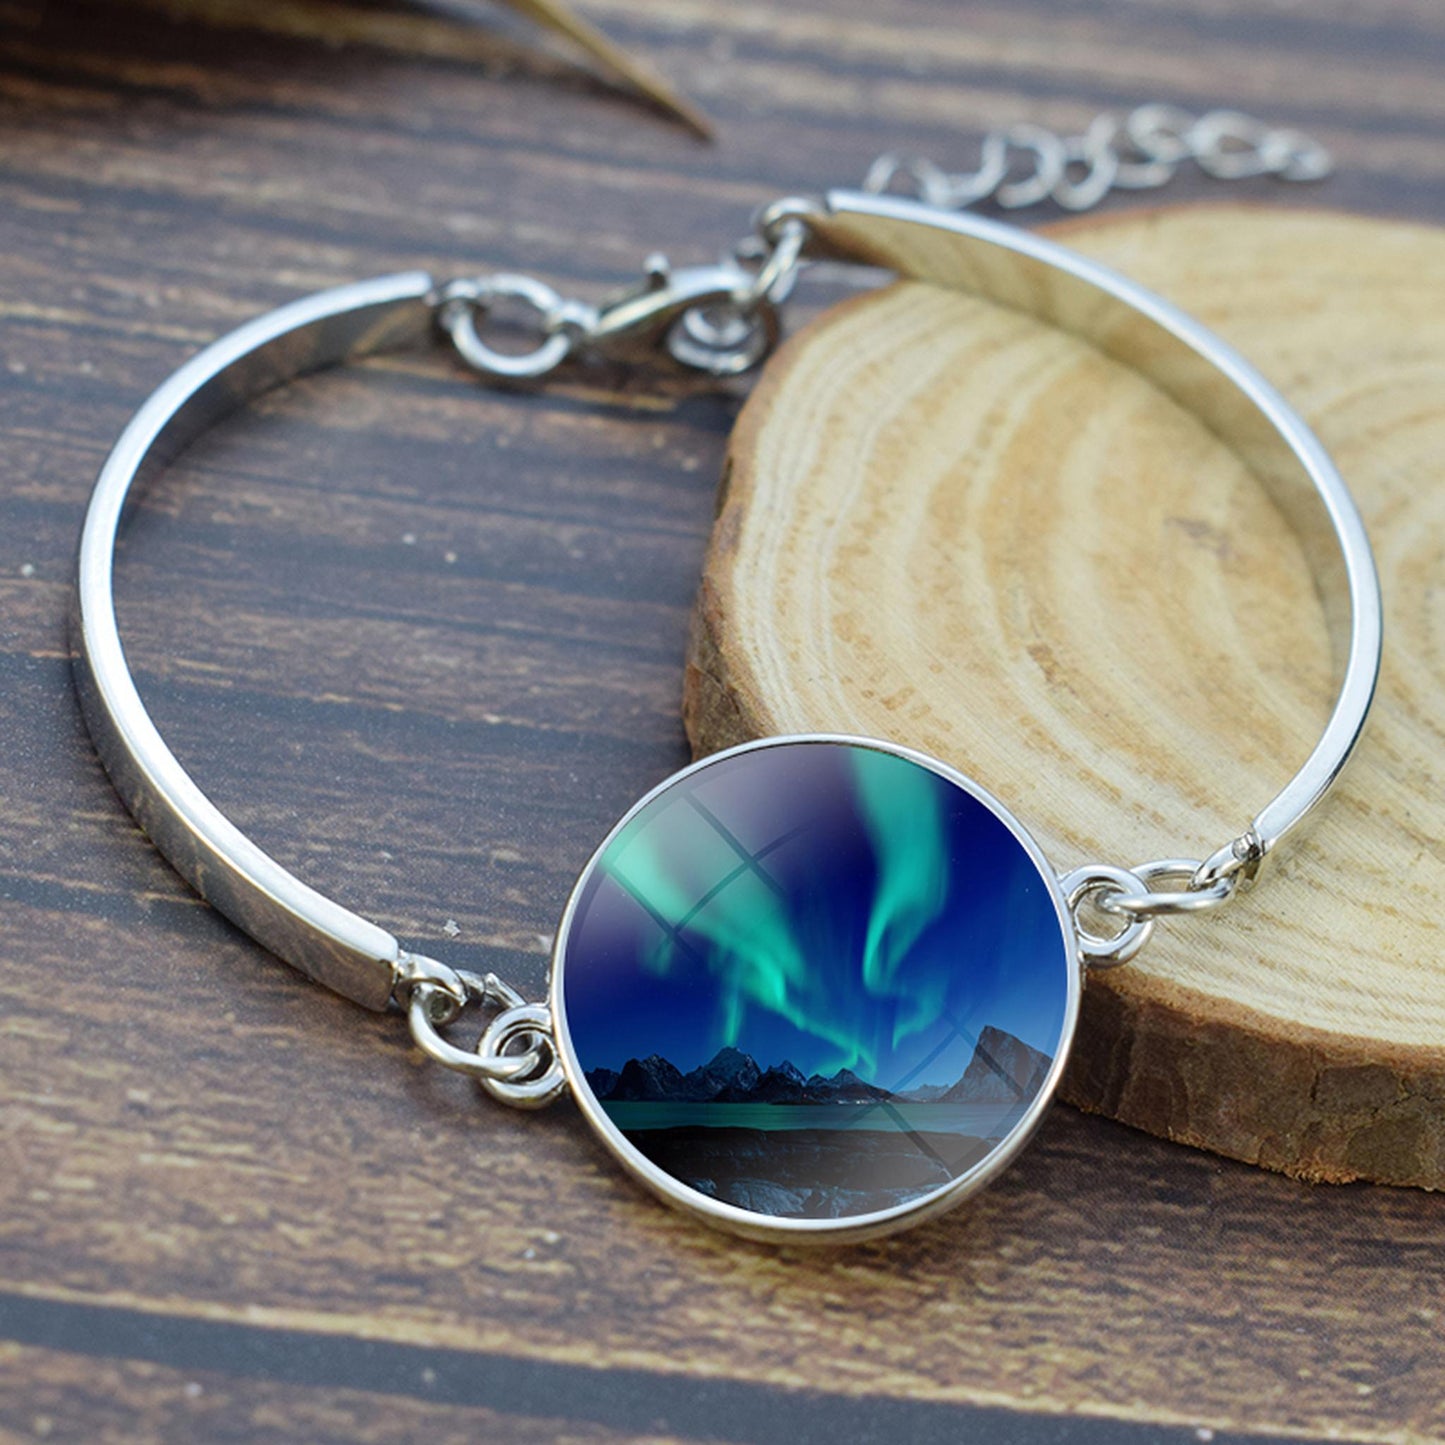 Unique Aurora Borealis Bangle Bracelet - Northern Light Jewelry - Glass Cabochon Silver Plated Bracelet - Perfect Aurora Lovers Gift 8